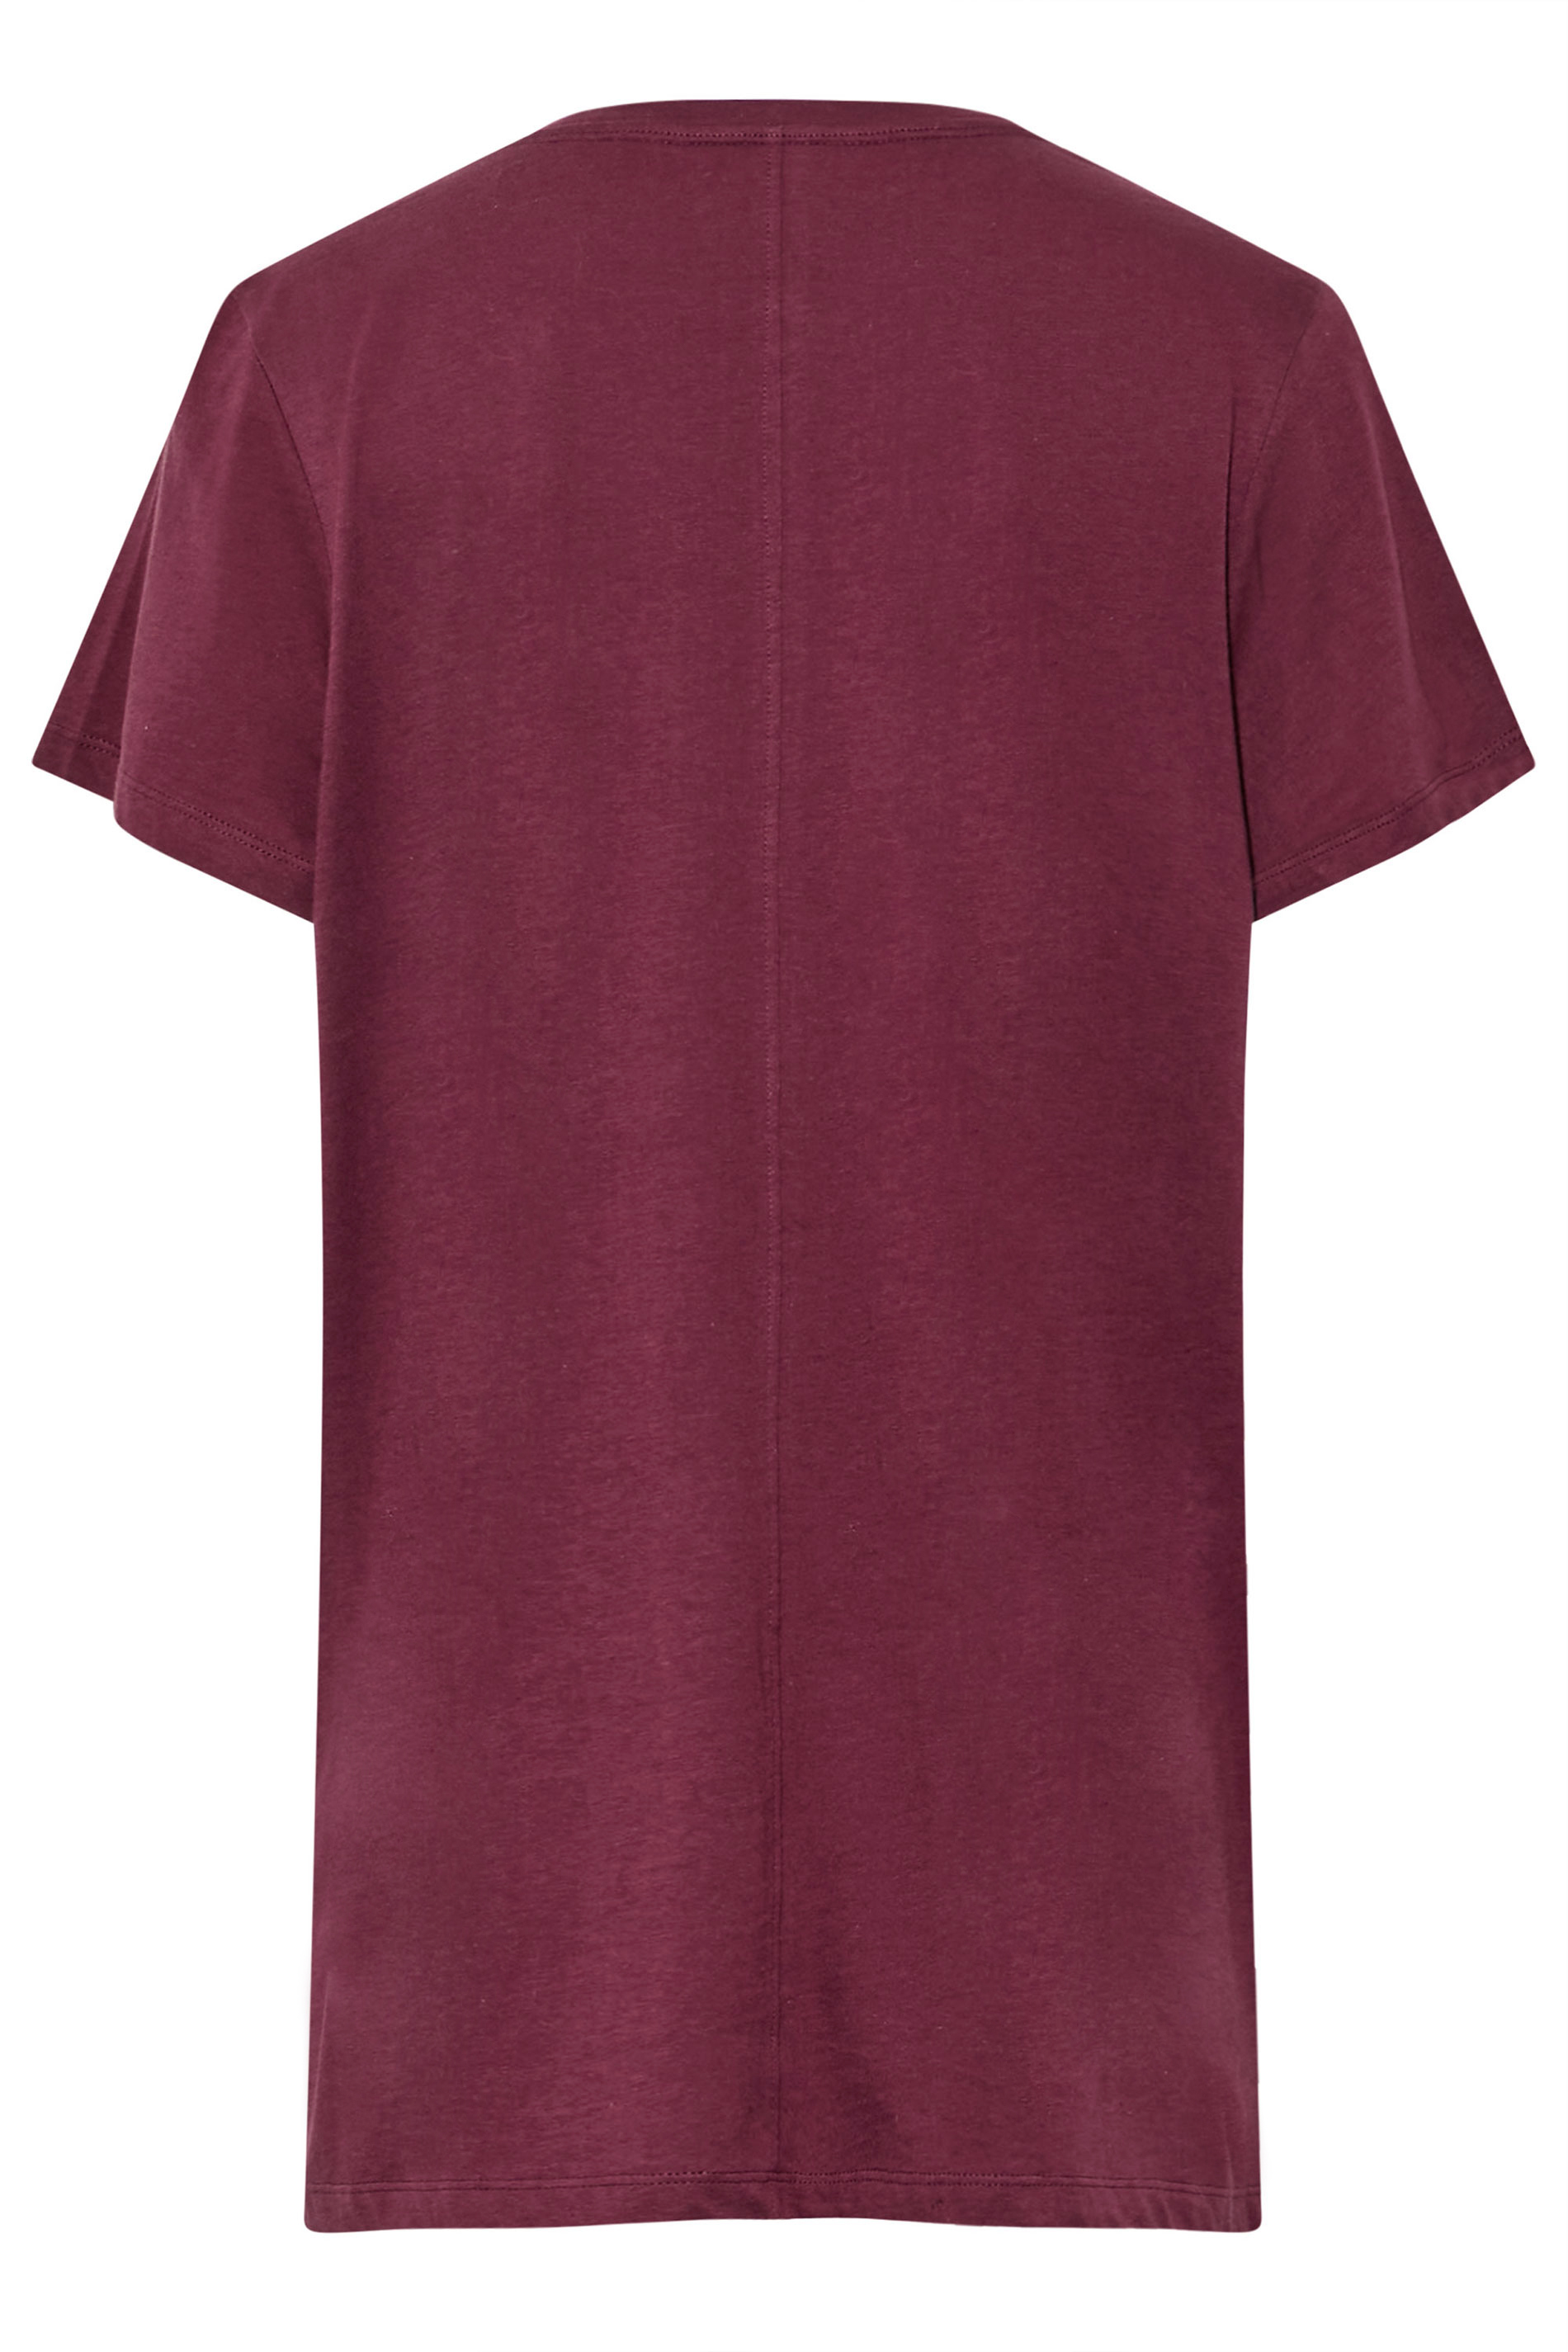 LTS Tall Burgundy Red Placket Pyjama Top | Long Tall Sally 3